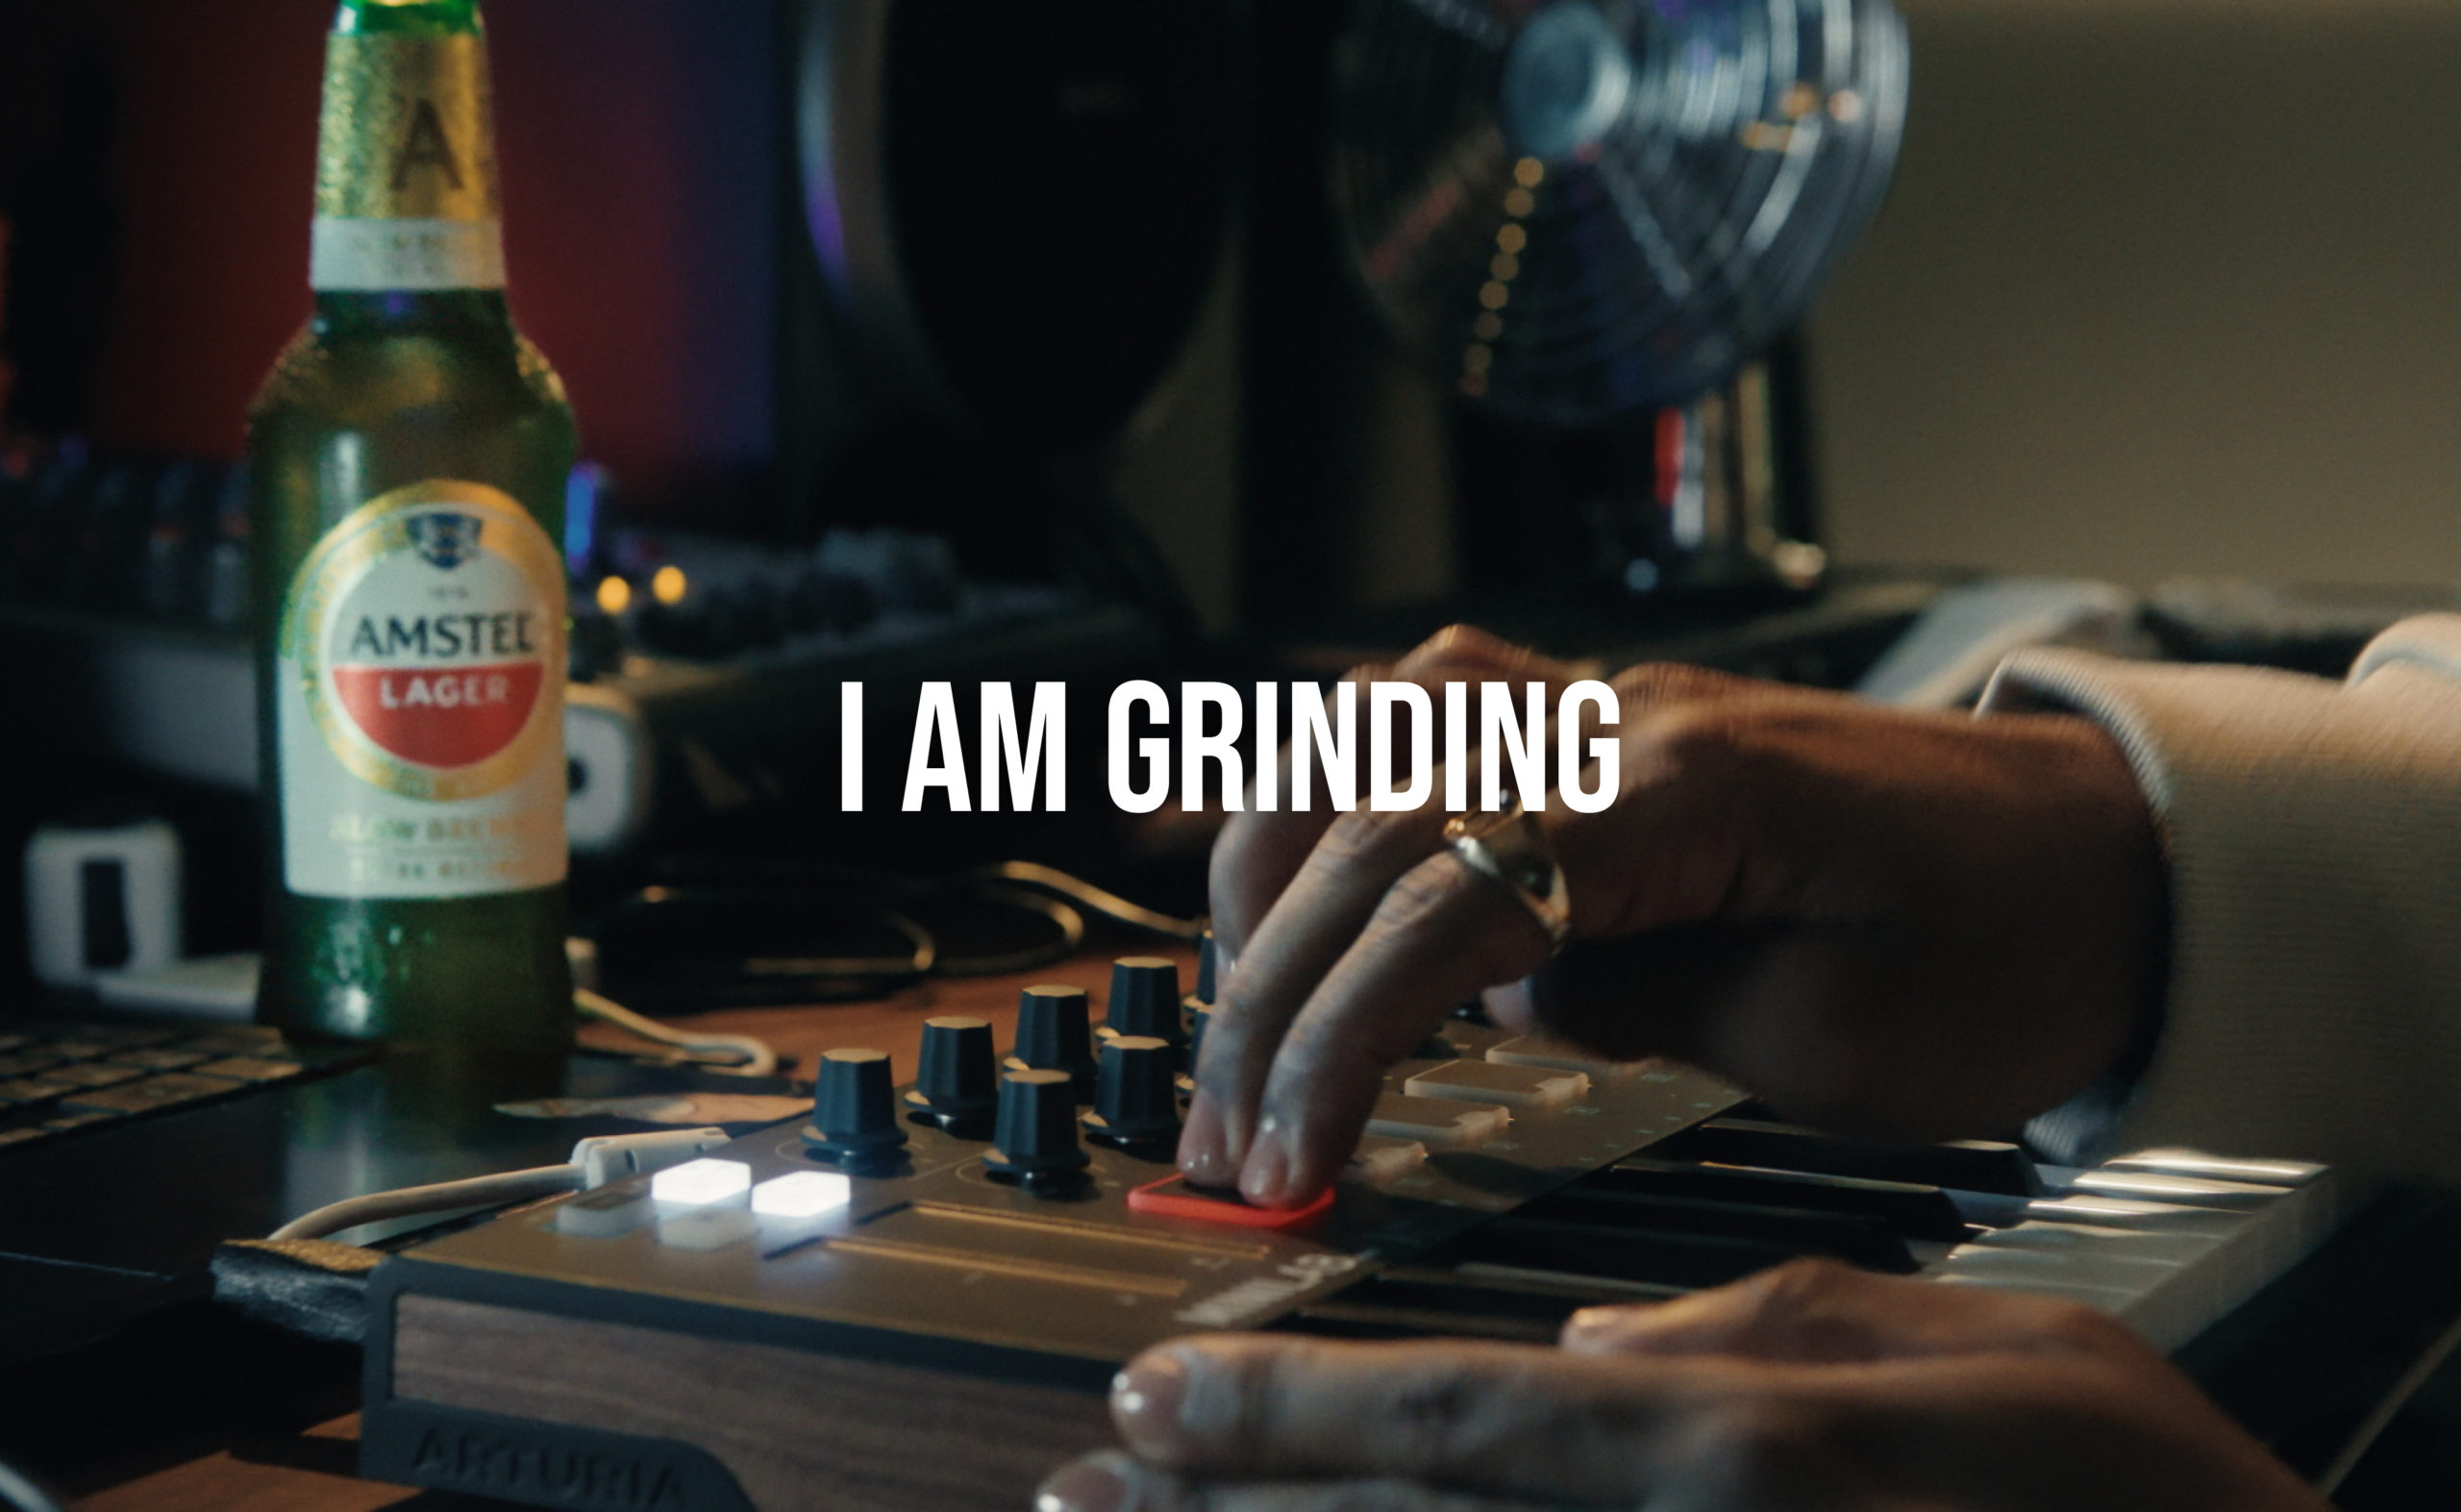 Amstel - I am grinding